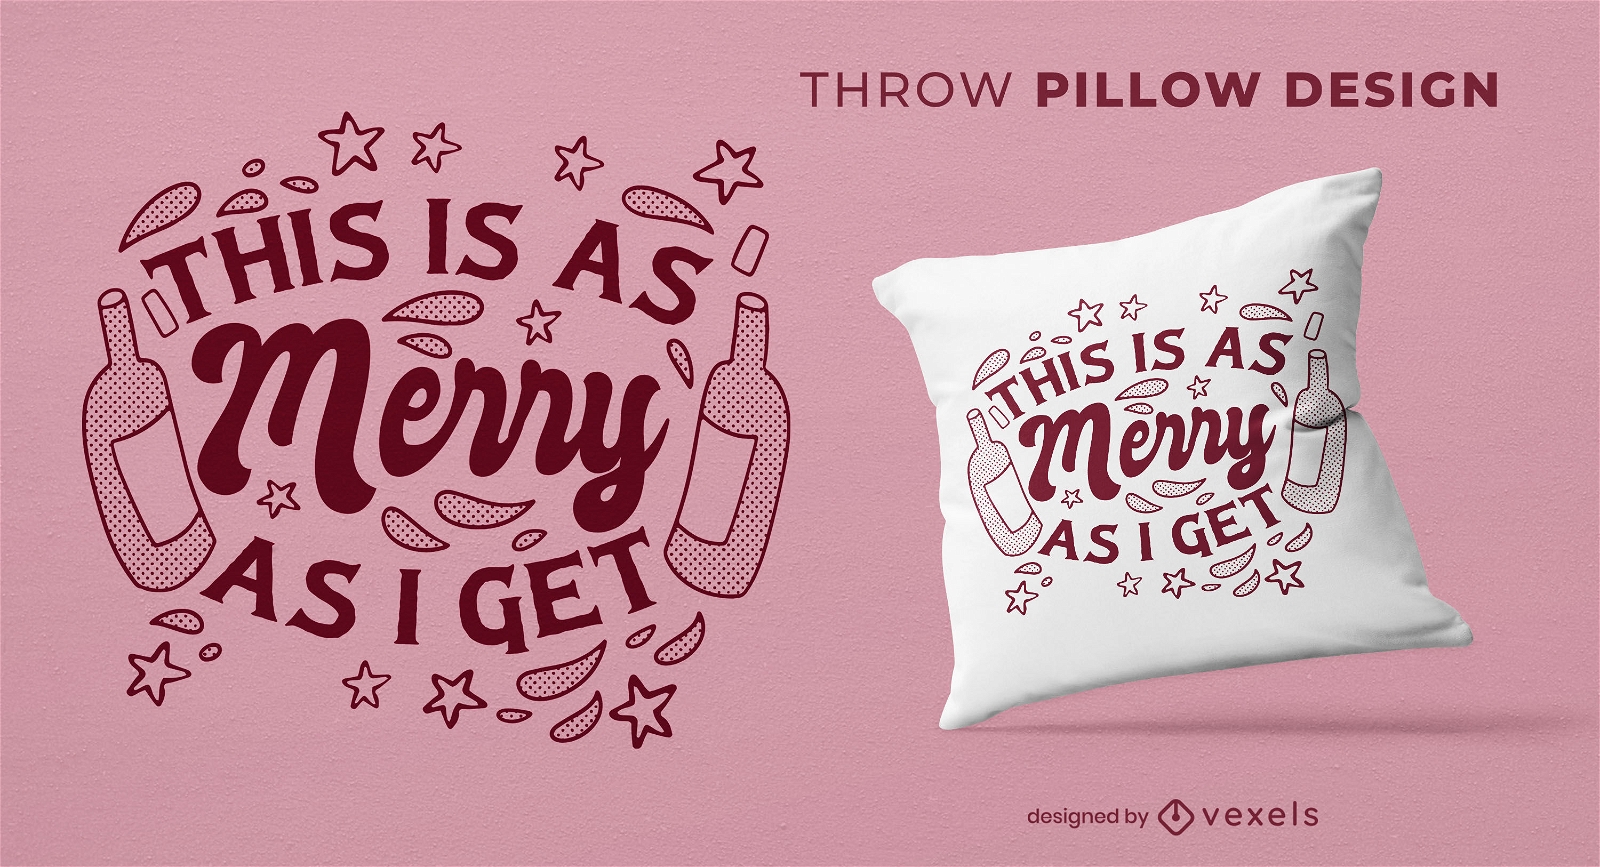 As merry as I get throw pillow design